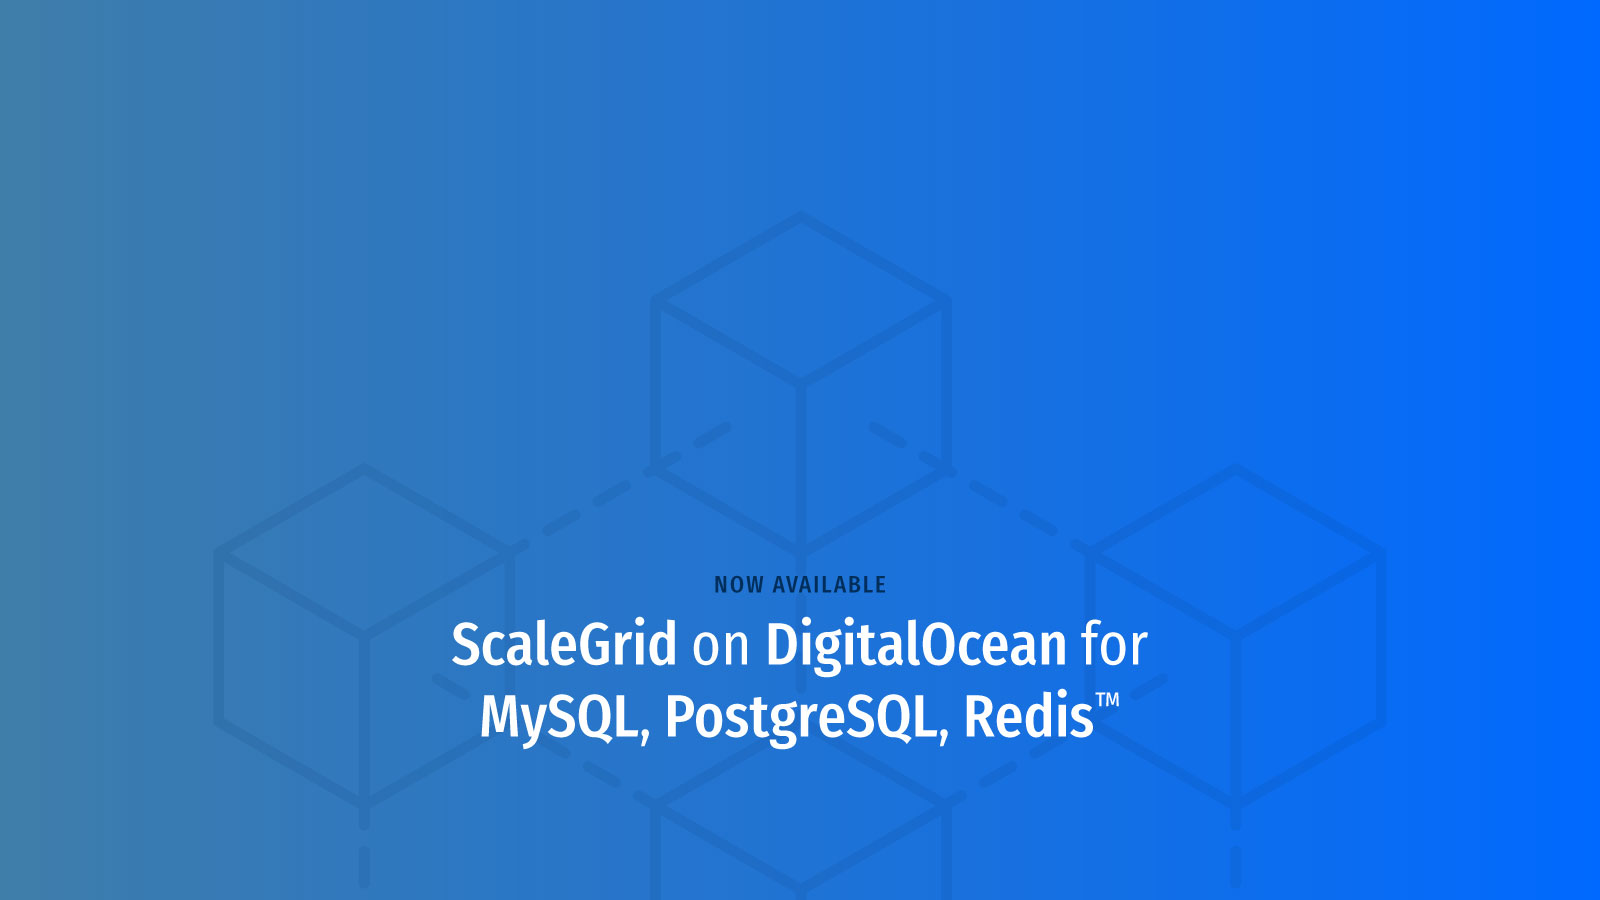 ScaleGrid DigitalOcean Support for MySQL, PostgreSQL and Redis™